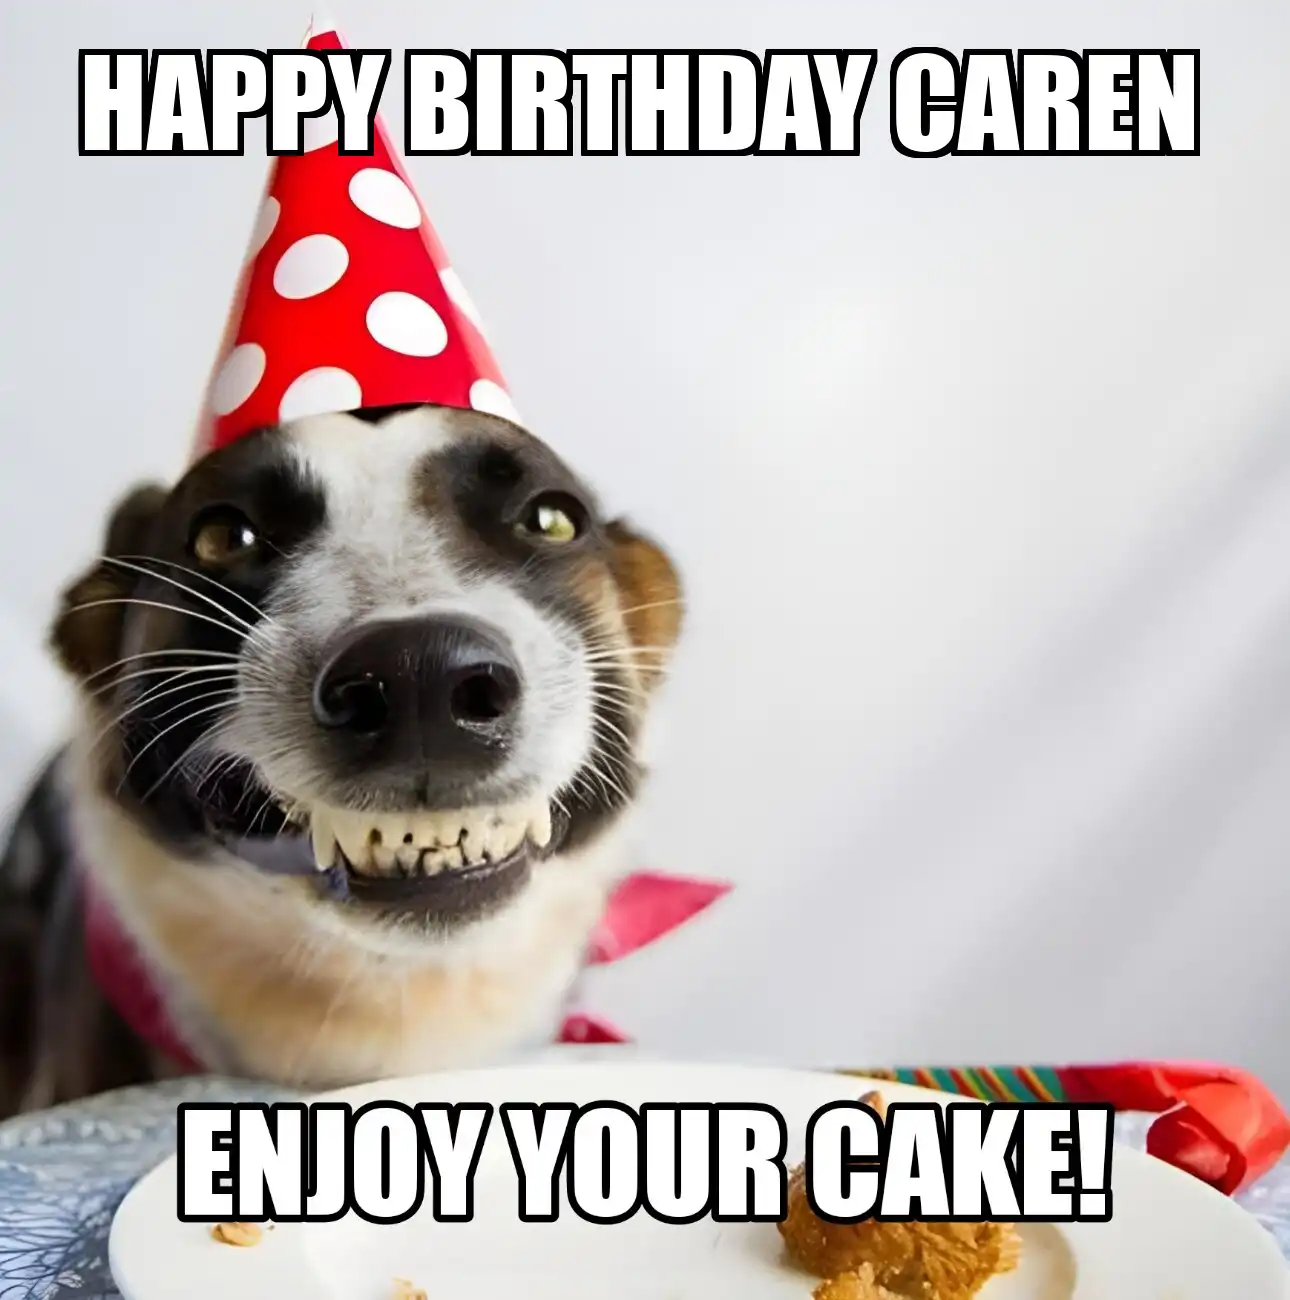 Happy Birthday Caren Enjoy Your Cake Dog Meme